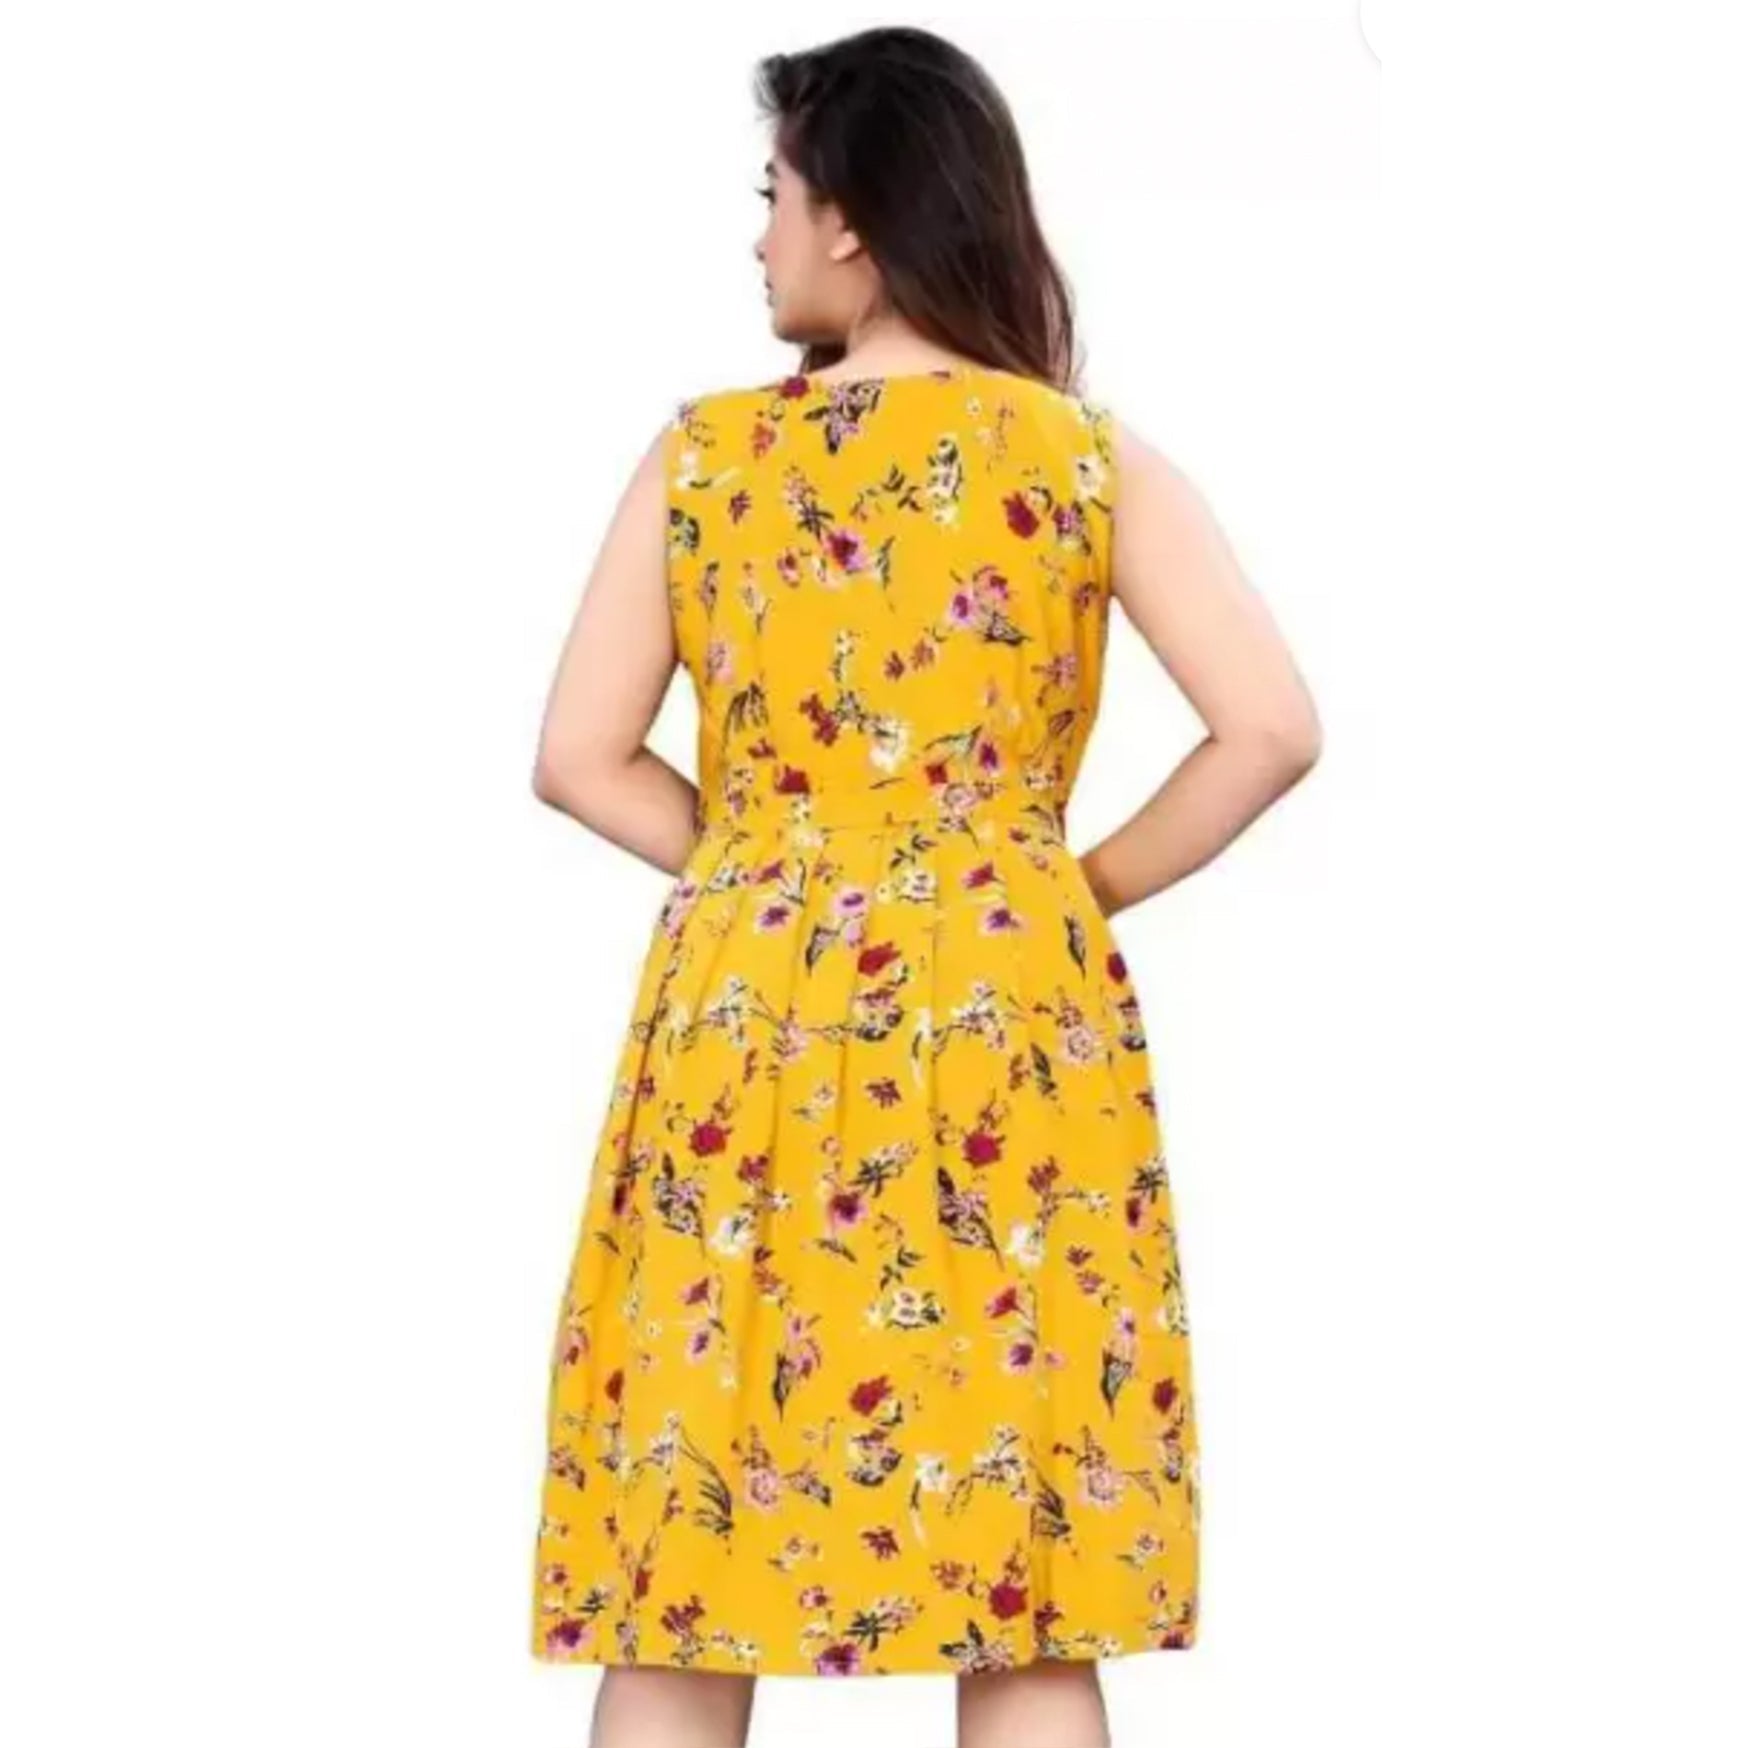 Jiya sarees women fit and flare yellow dress